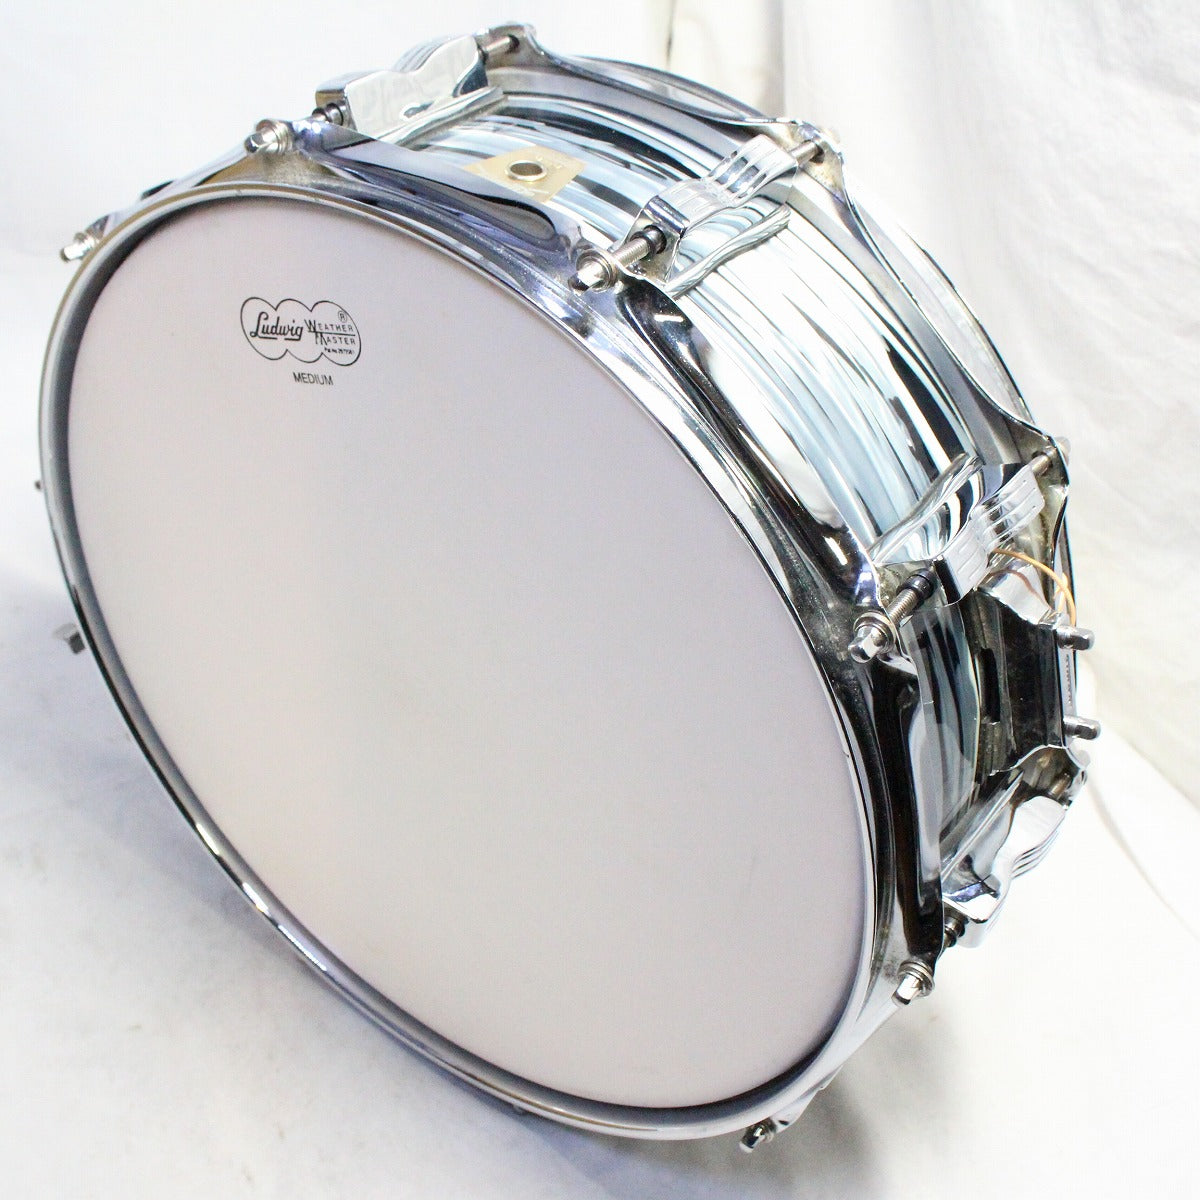 USED LUDWIG / LS401 14x5 Classic Maple Radic Snare Drum [08]